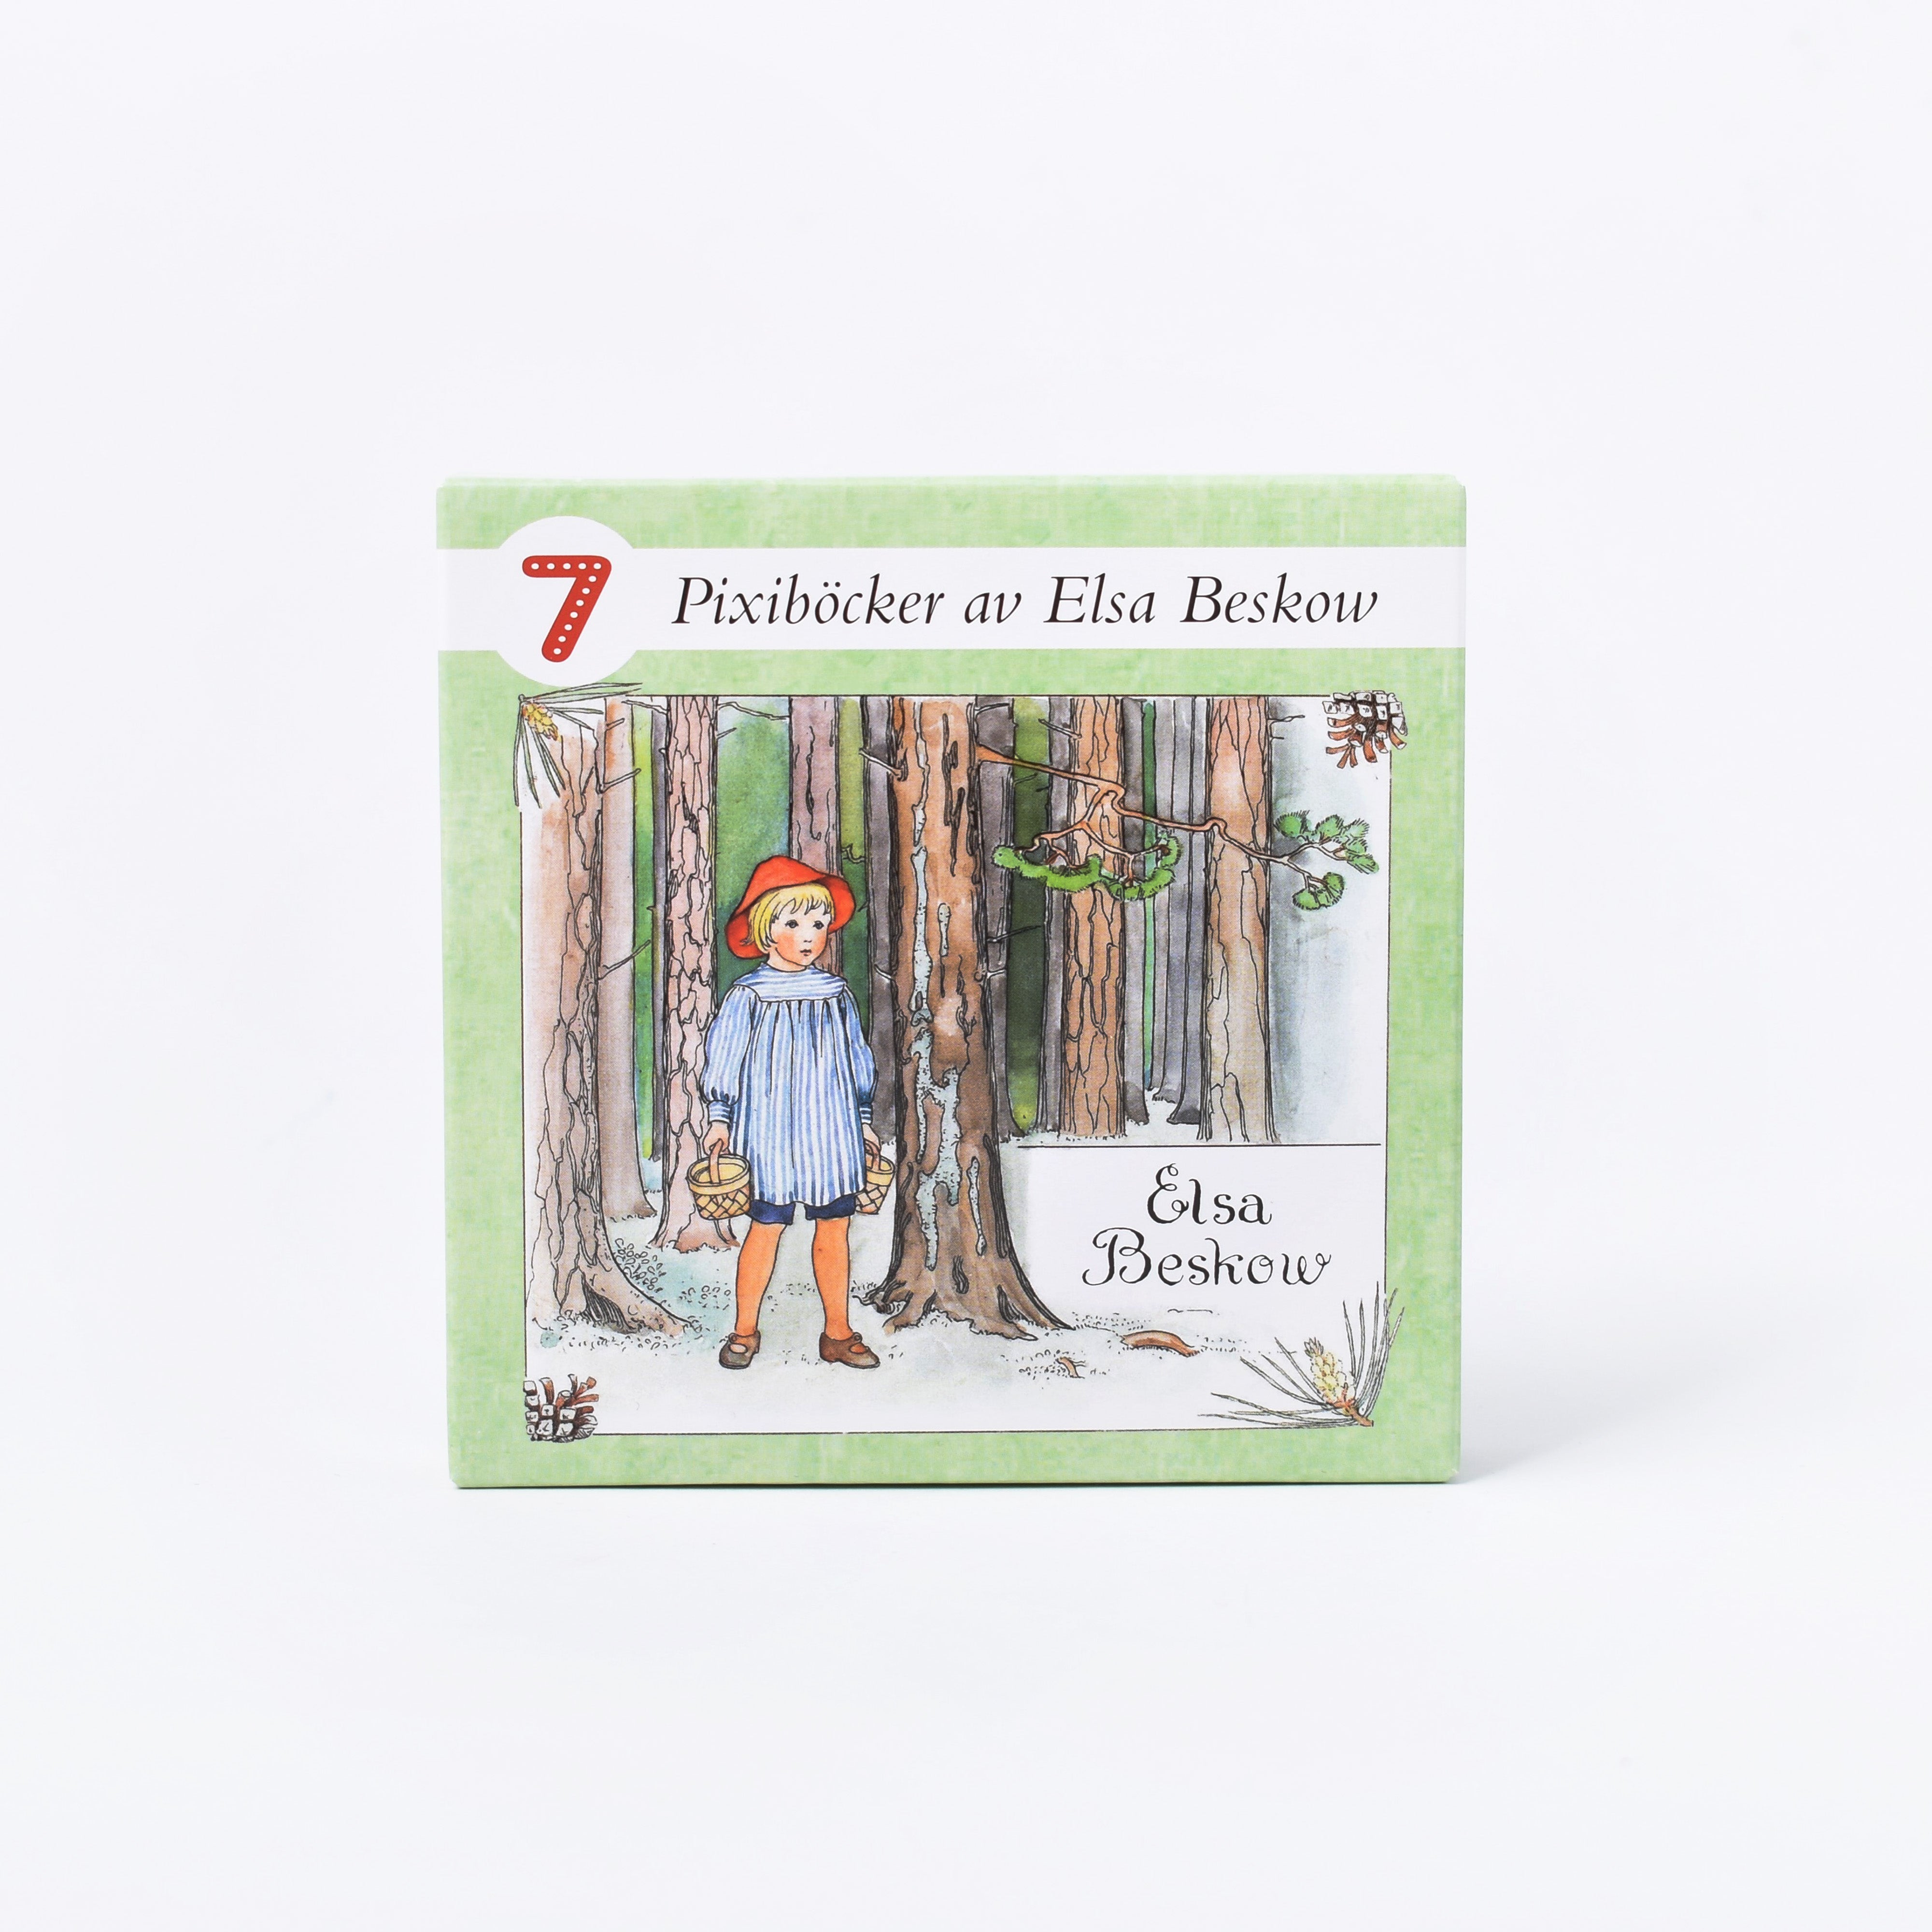 7 pixiböcker i grön ask med berättelser av Elsa Beskow